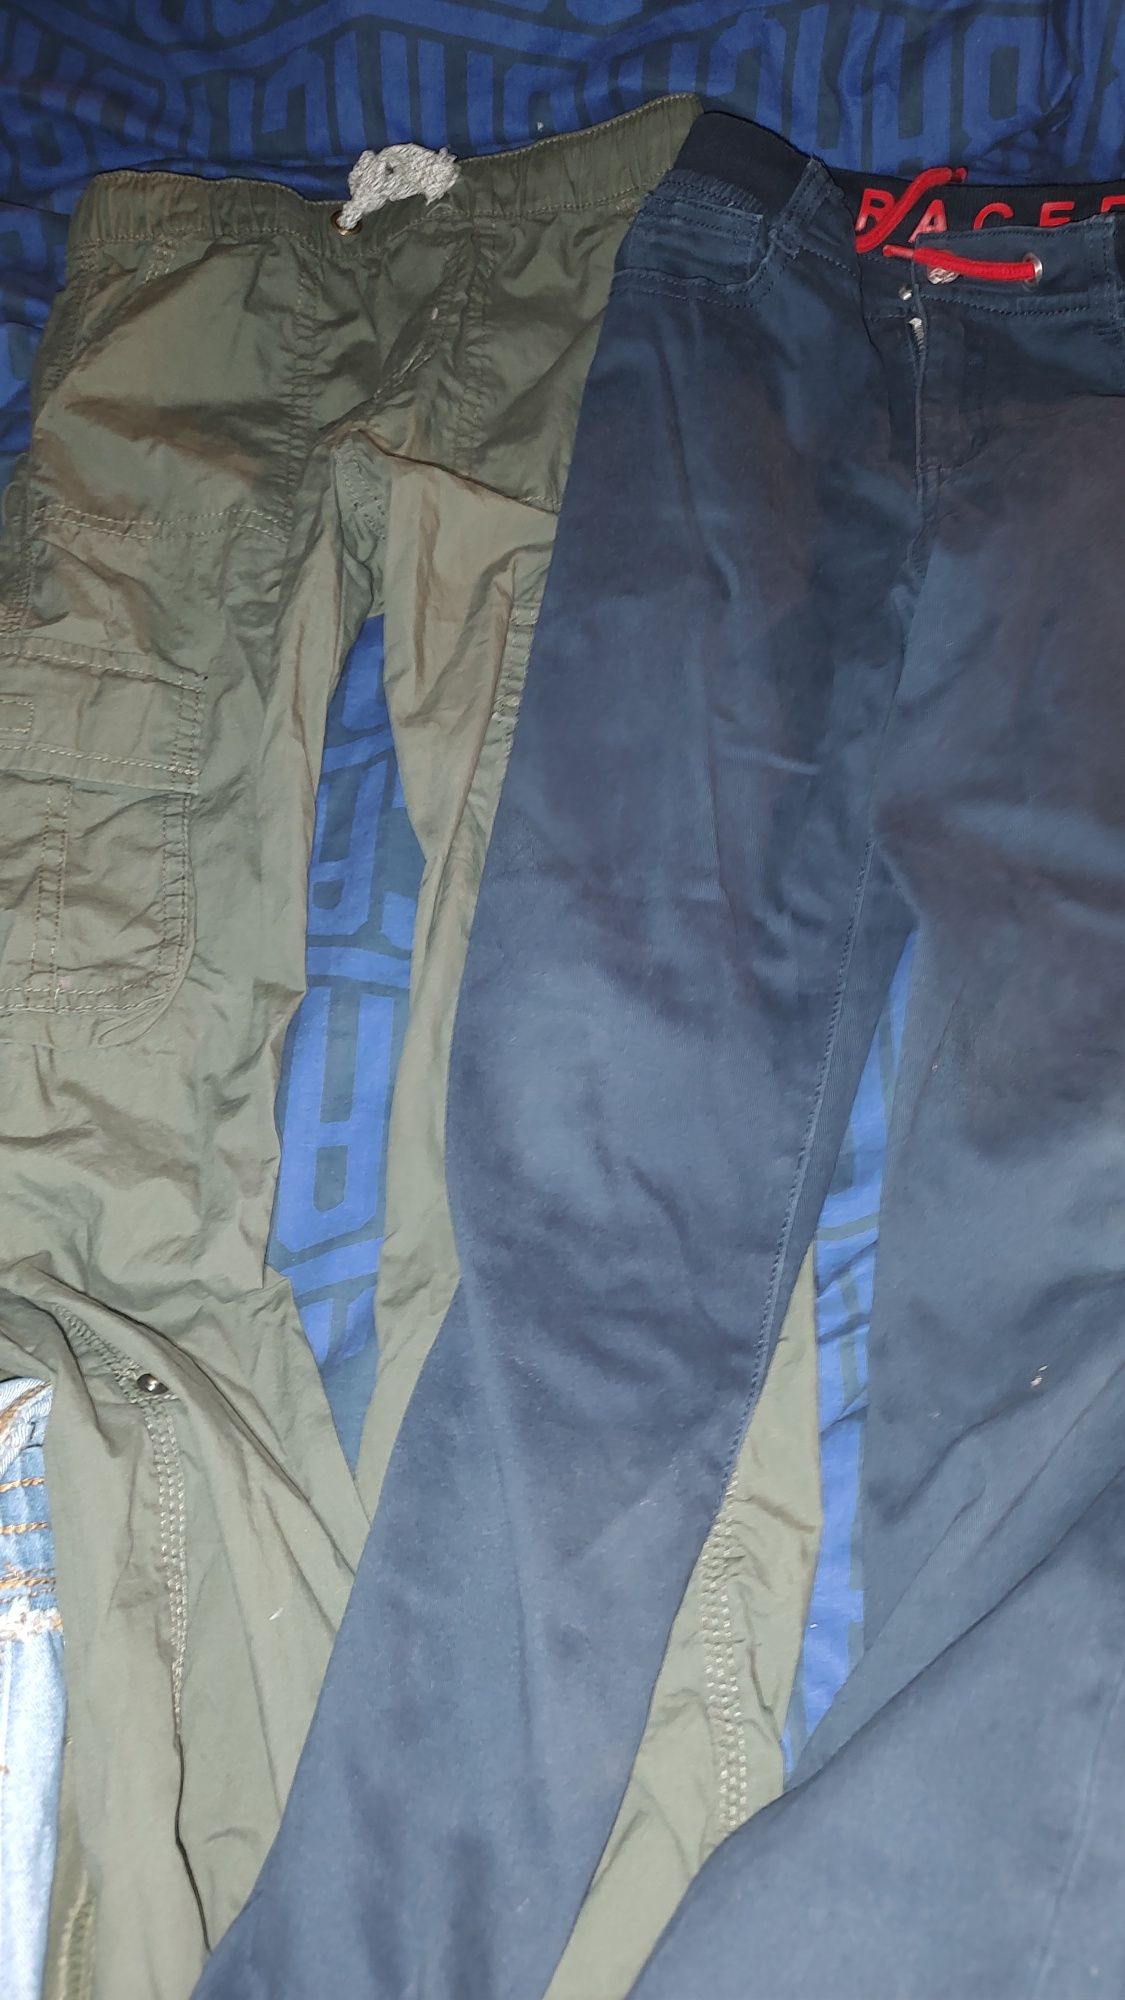 Super paka dla chlopca 128-134 kurtka zimowa GRATIS128 H&M,bluzy Adida